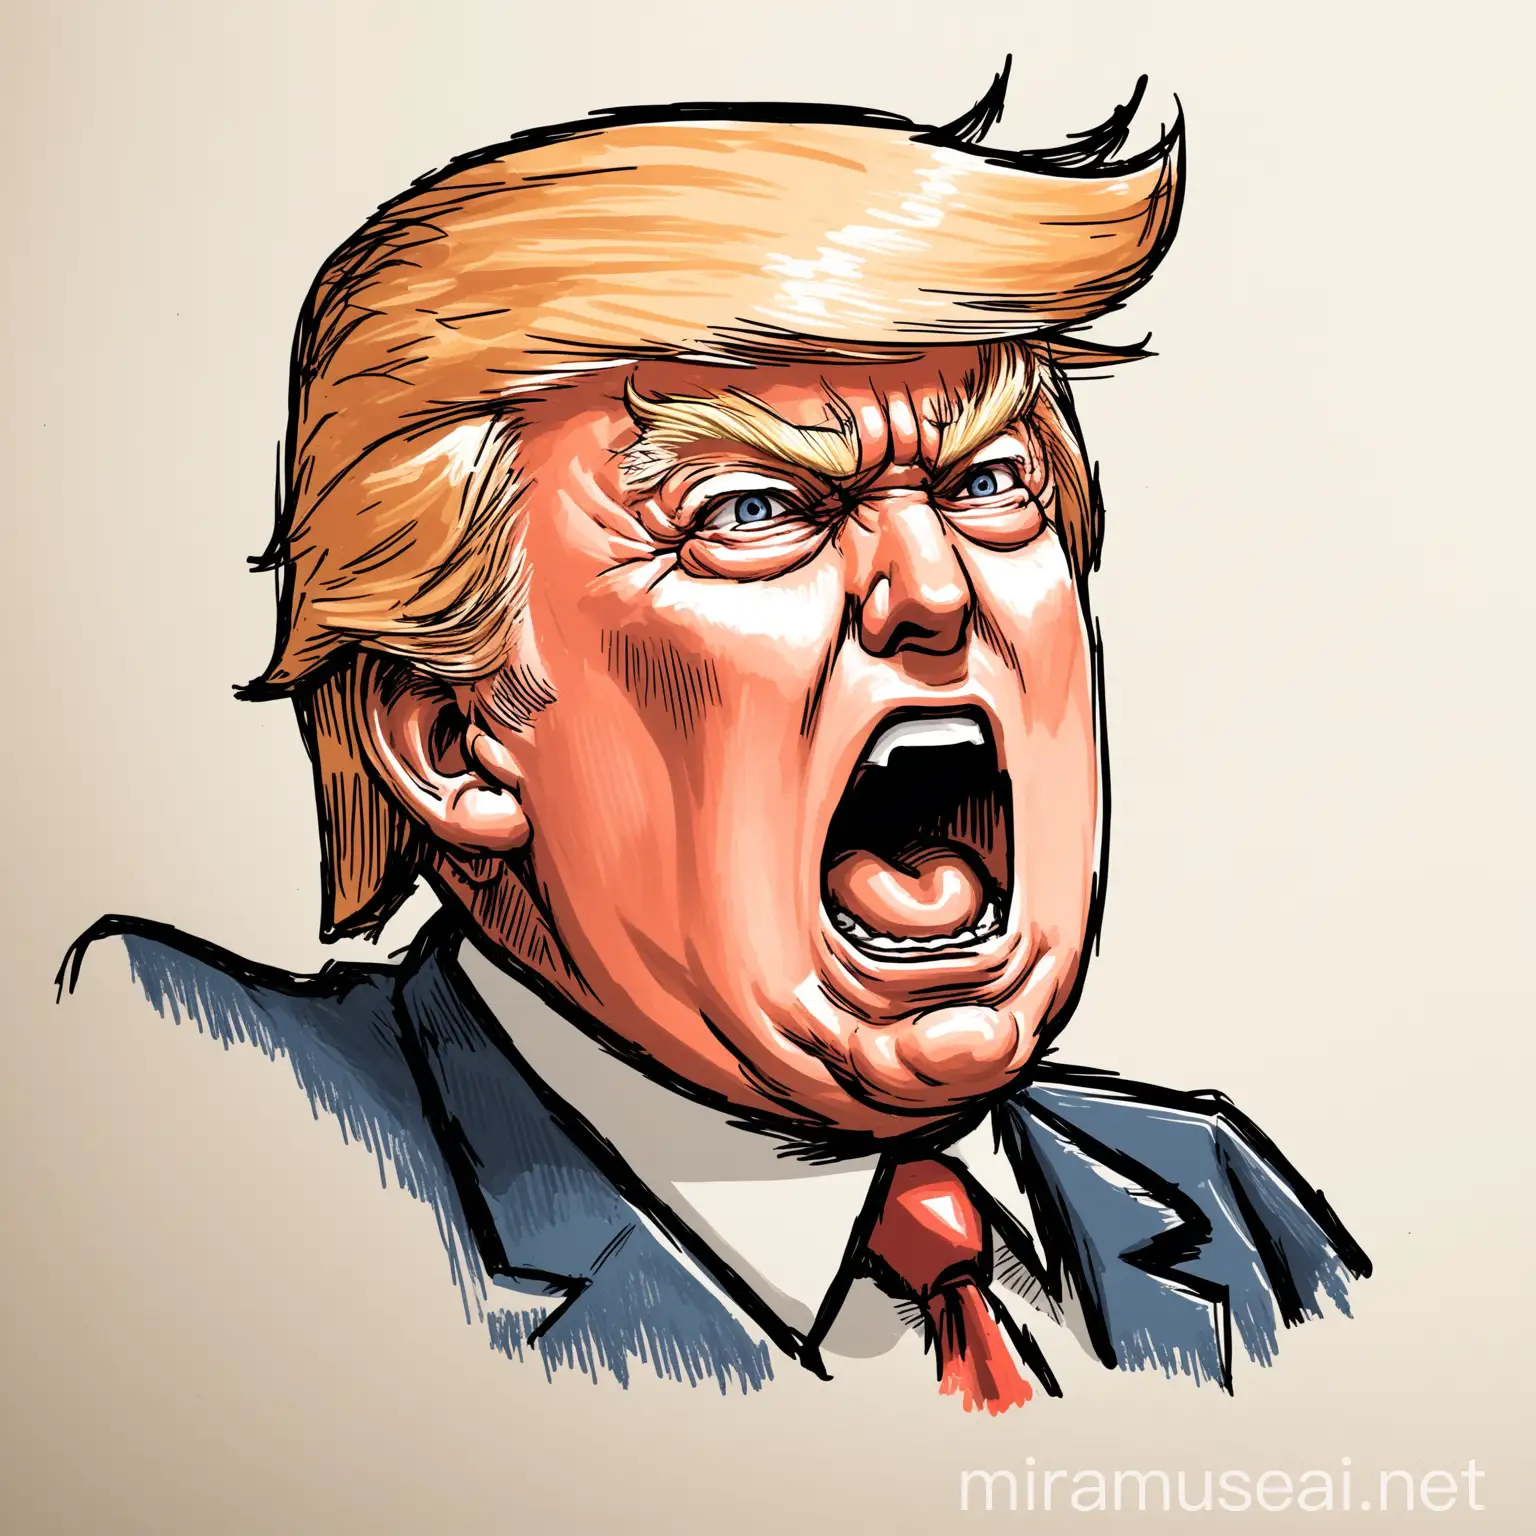 hand-drawn illustration of Donald Trump yelling, half angle